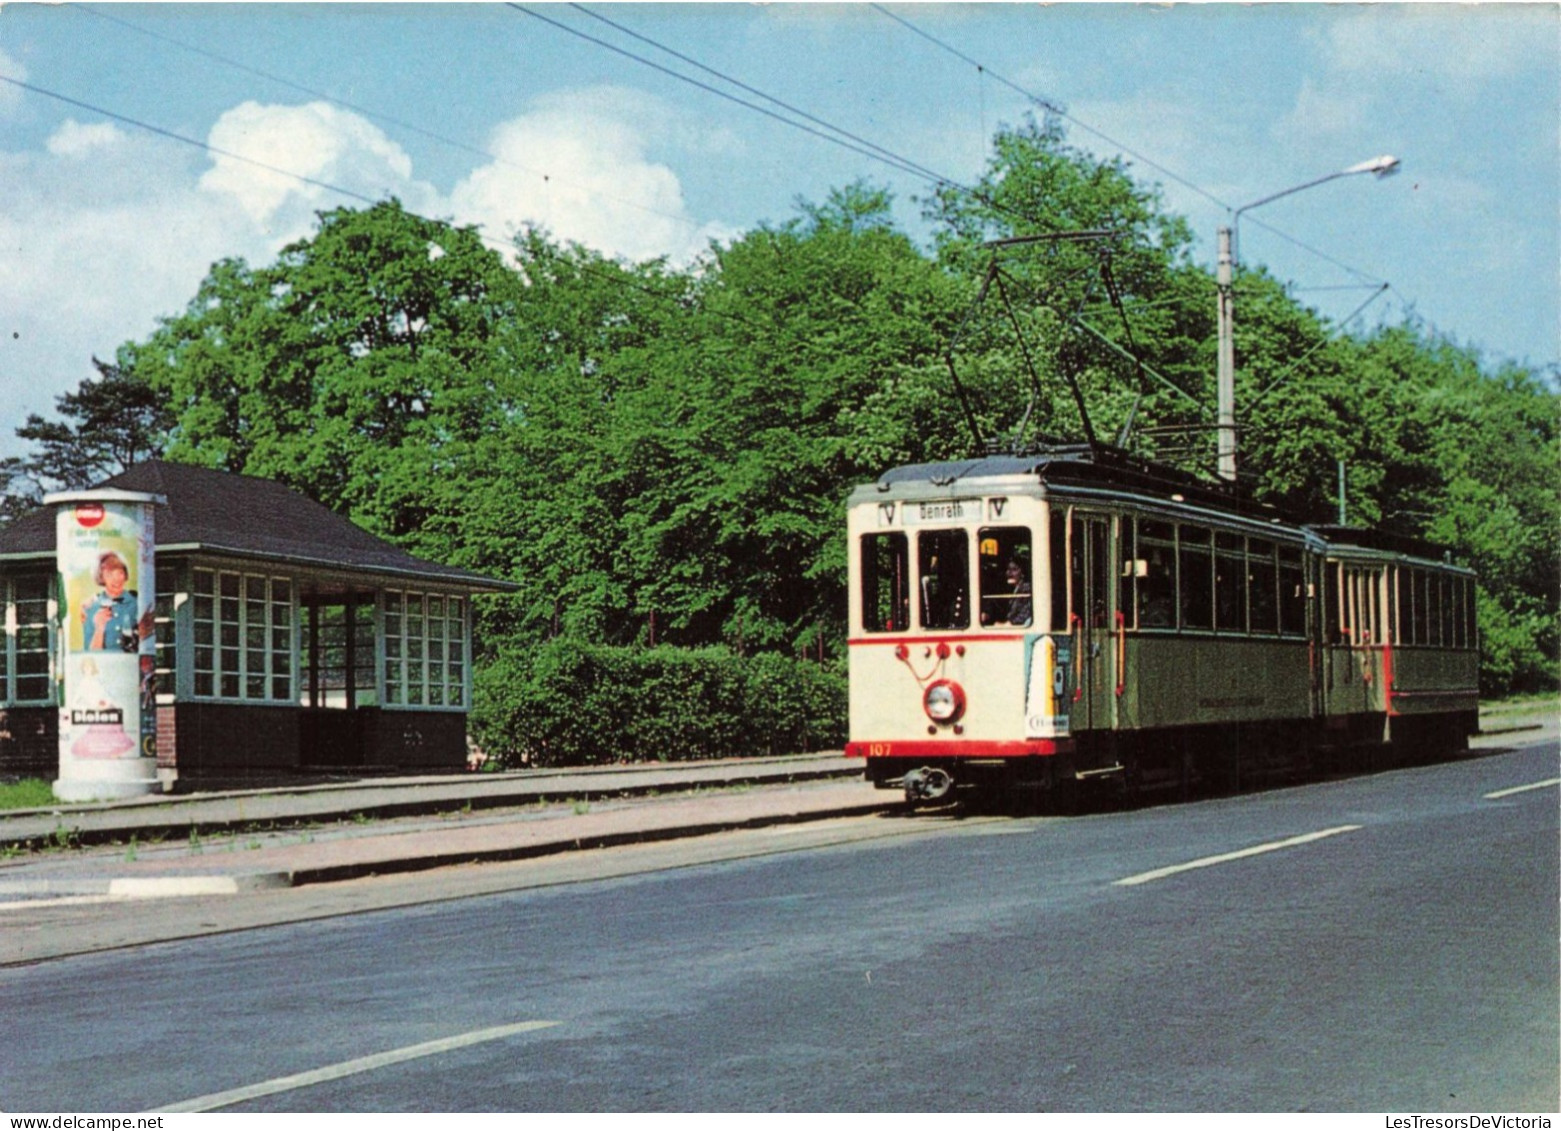 TRANSPORT - Triebwagen 107 Mit Beiwagen - Colorisé - Carte Postale - Tram